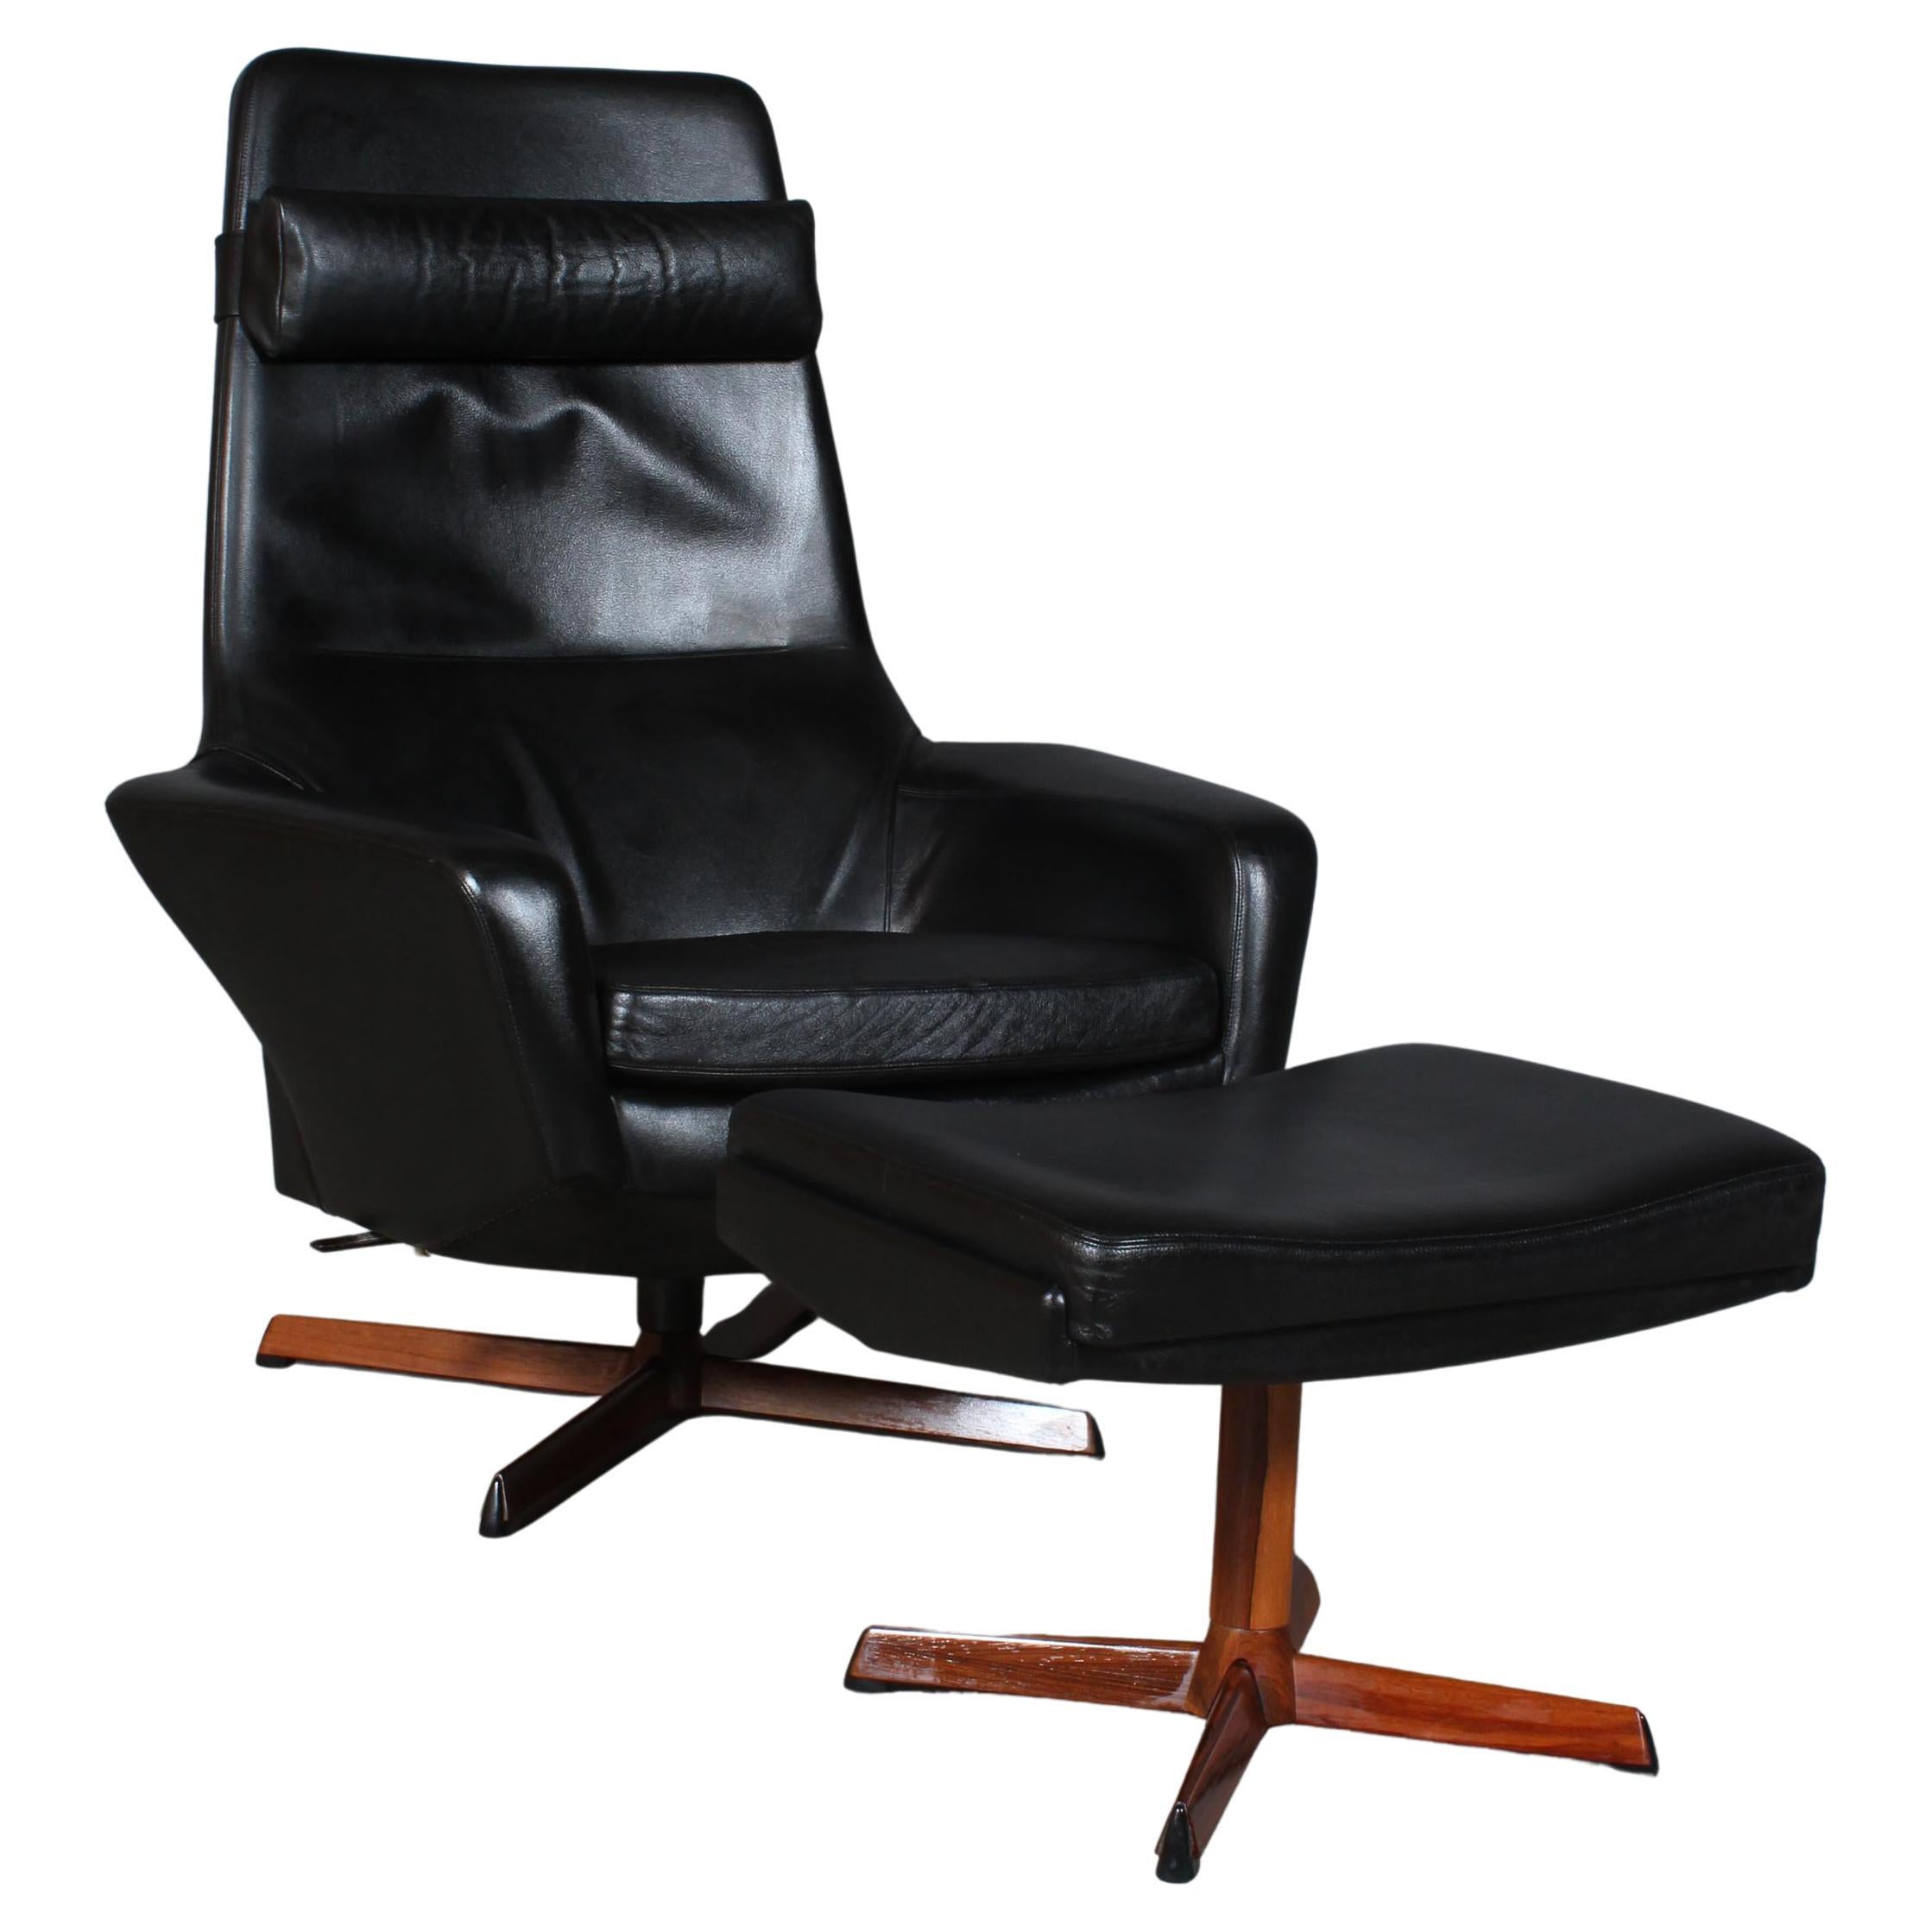 Ib Kofod-Larsen Lounge Chair with Ottoman